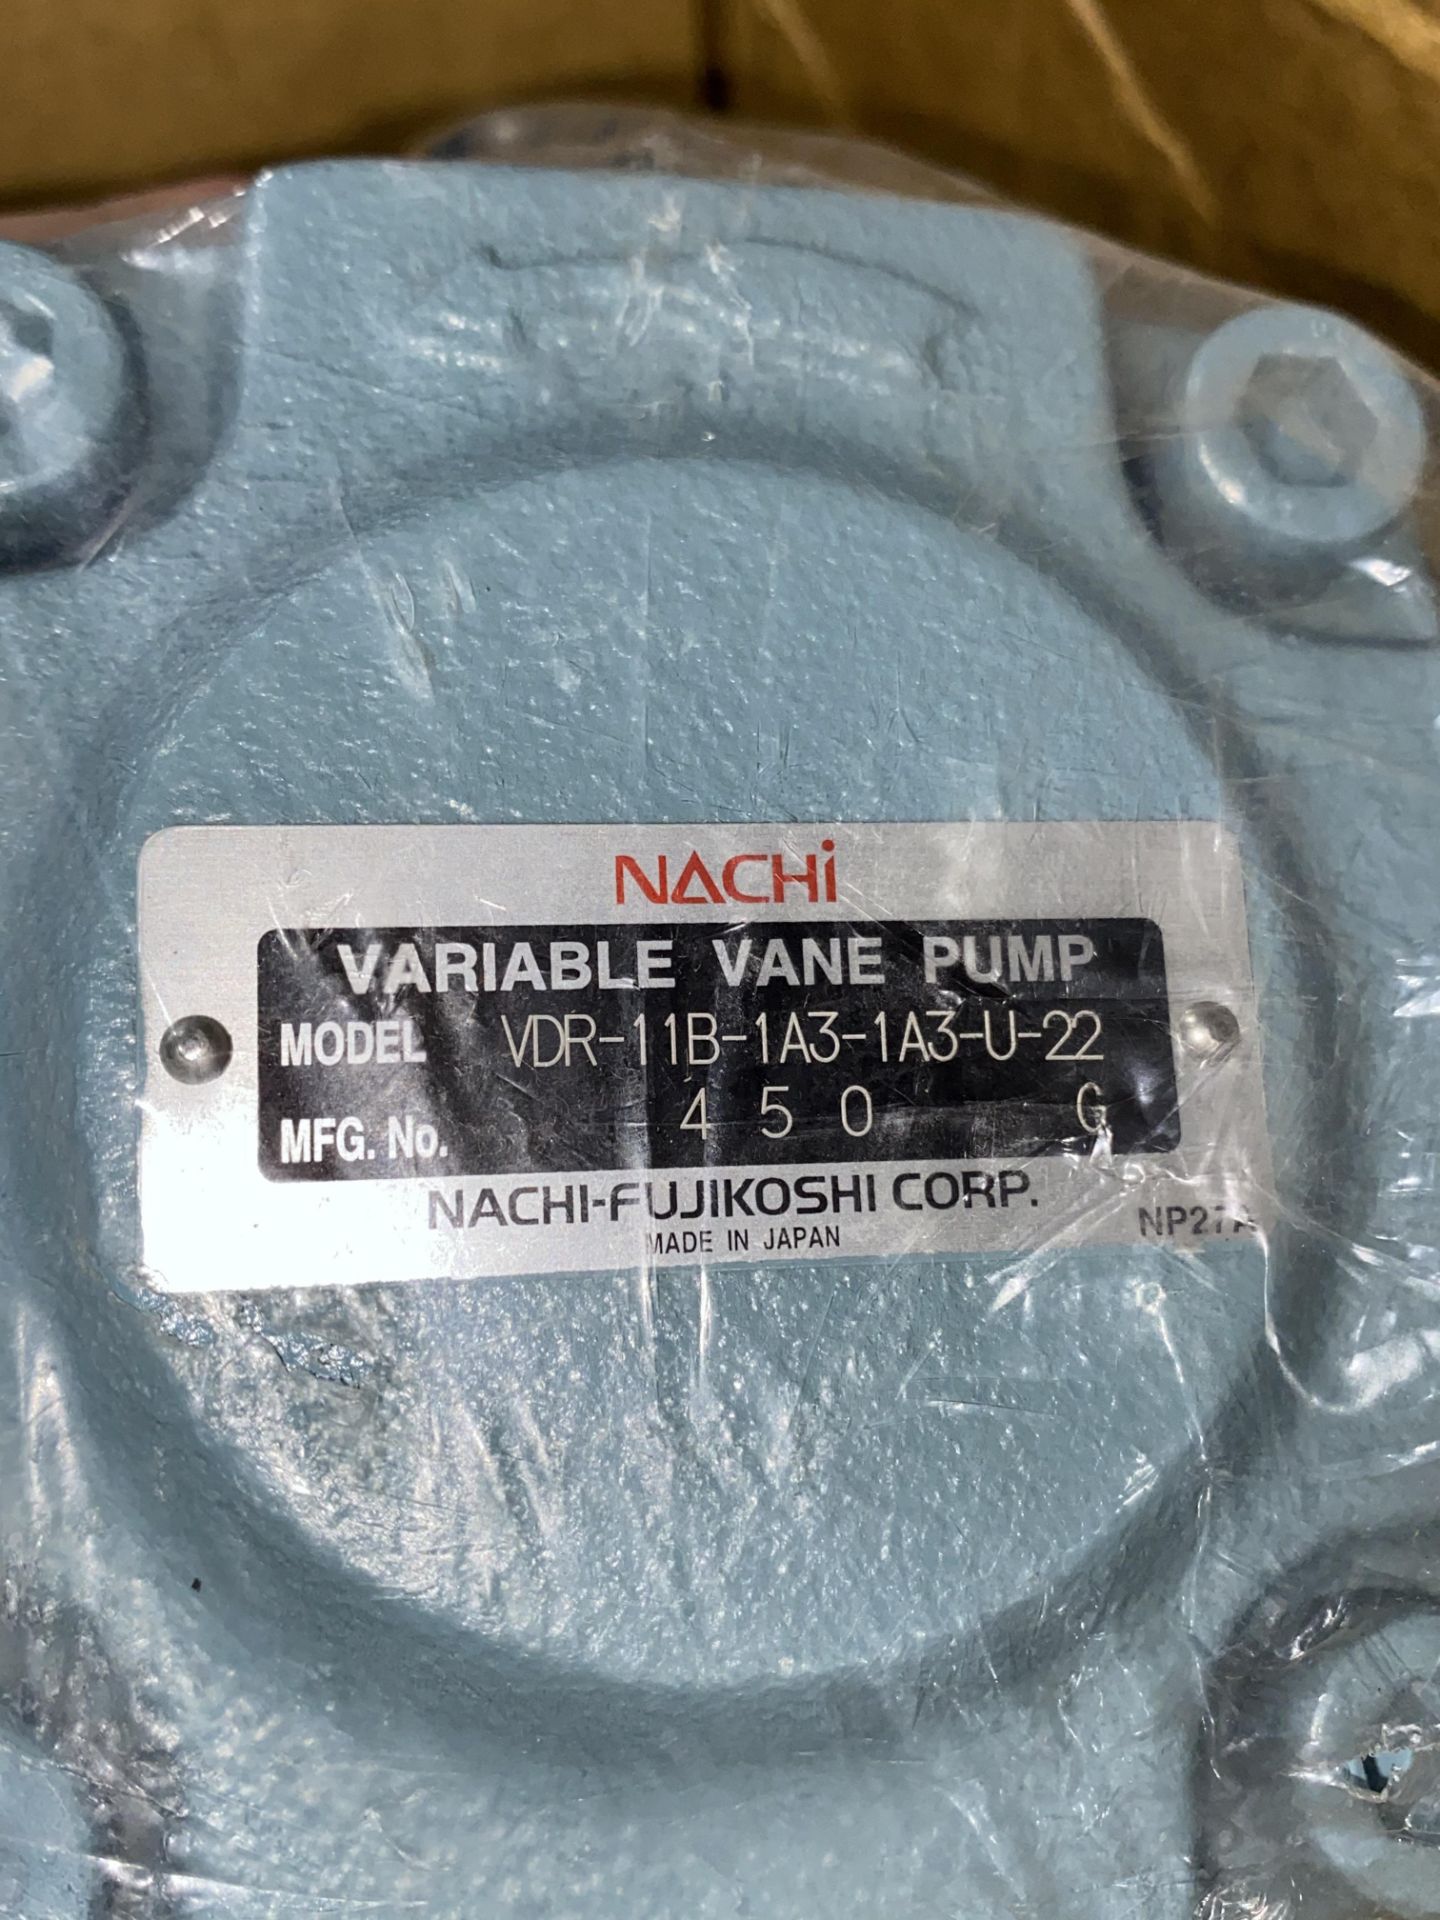 Nachi Variable Vane Pump - VDR-11B-1A3-U-22 - Image 2 of 2